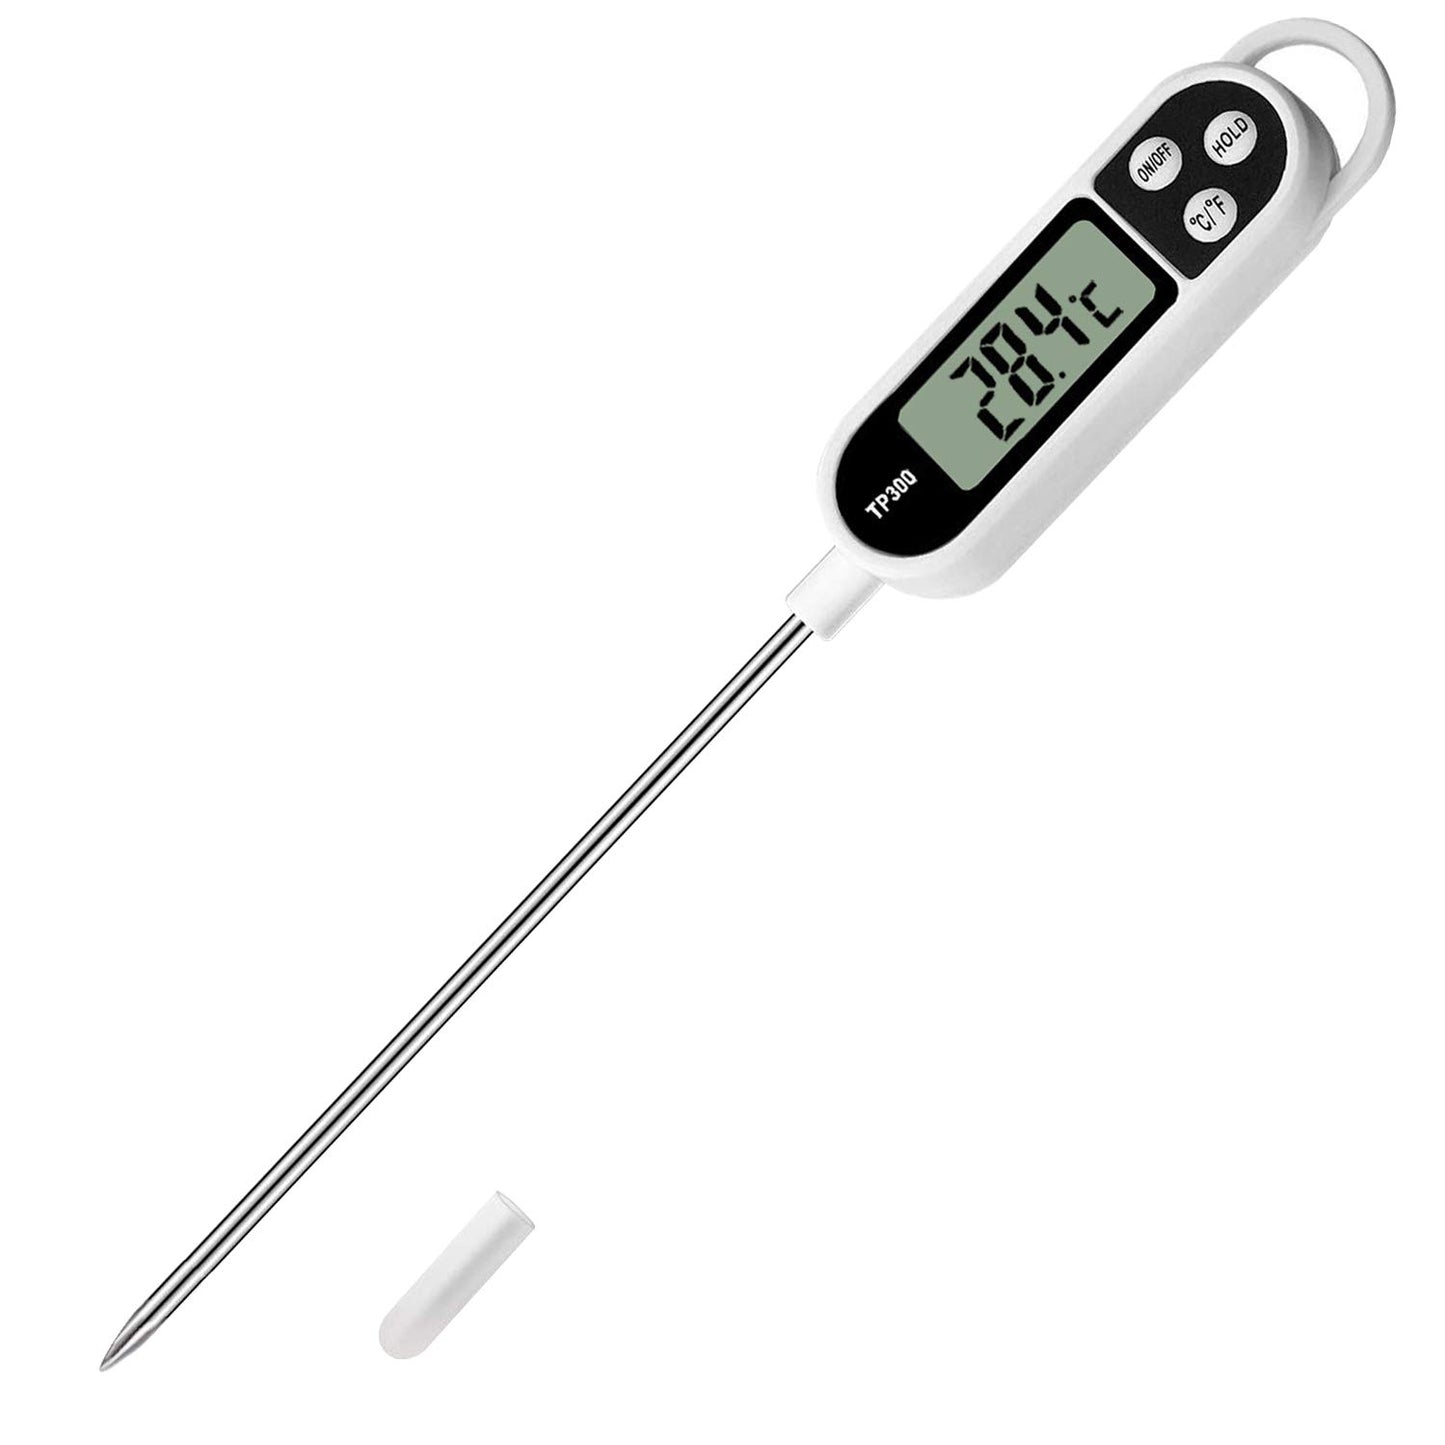 NANGOALA Meat Probe Instant Read Digital Thermometer